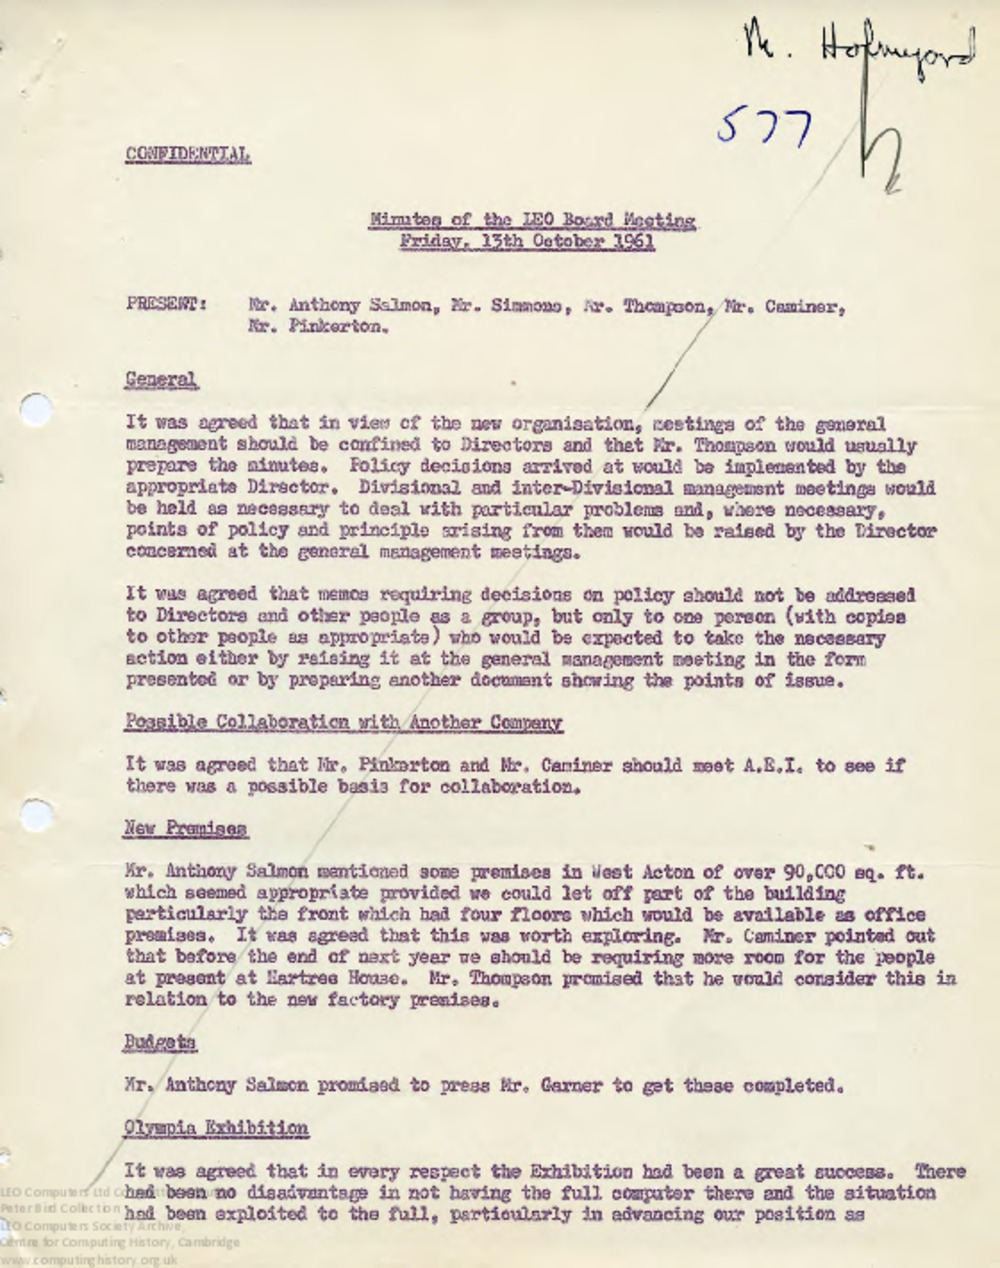 Article: 64410 LEO Management Meeting, 1961 fourth quarter (Oct-Dec 1961)